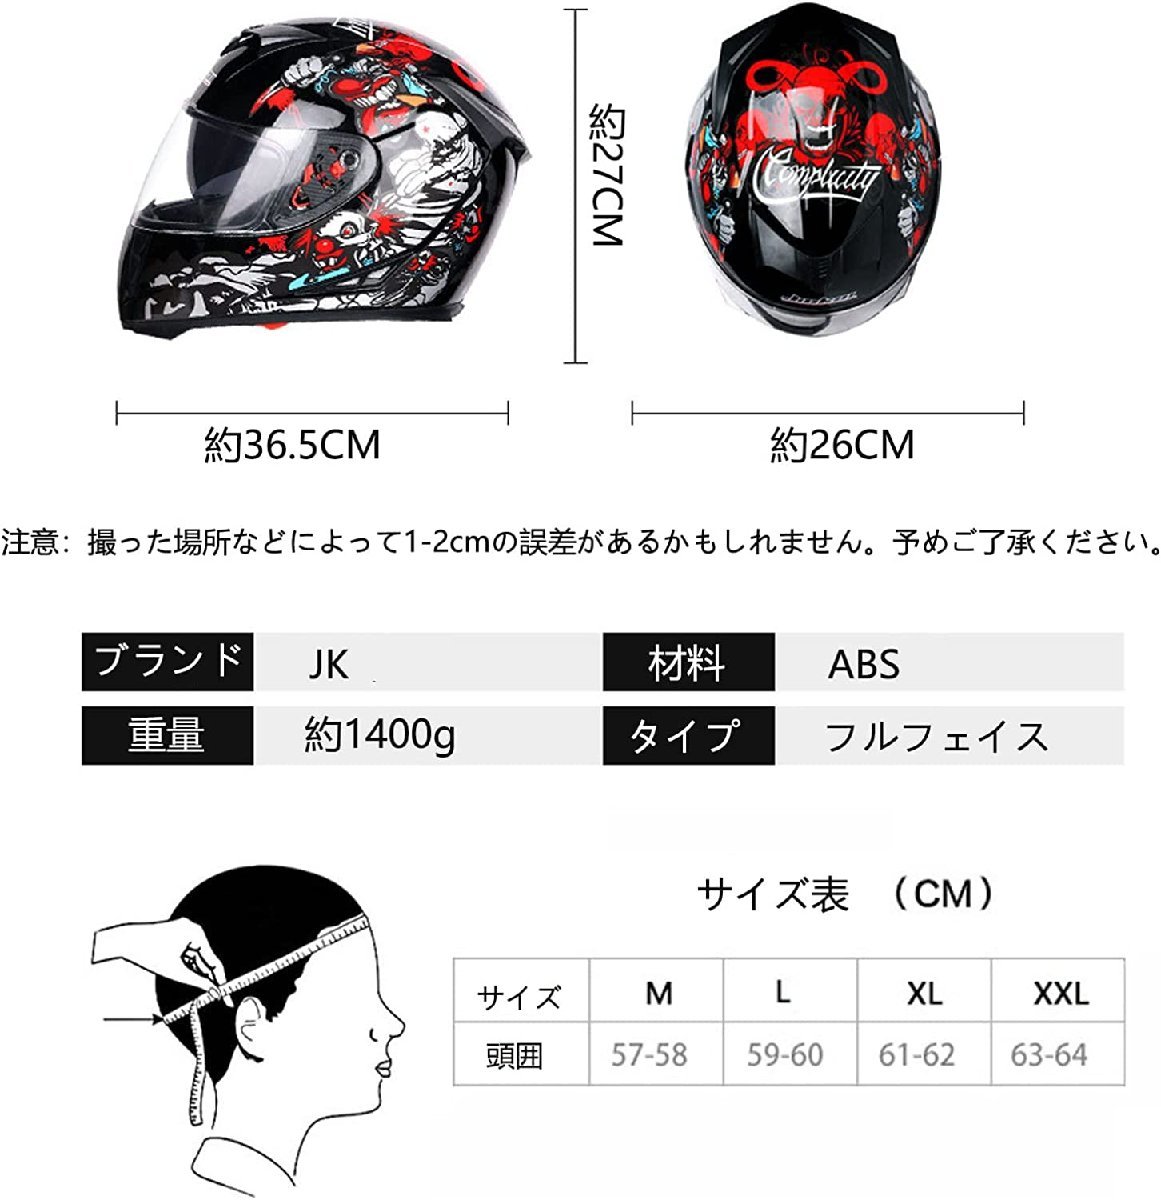 Arai GP6S 8859 四輪用フルフェイスヘルメット - セキュリティ・セーフティ